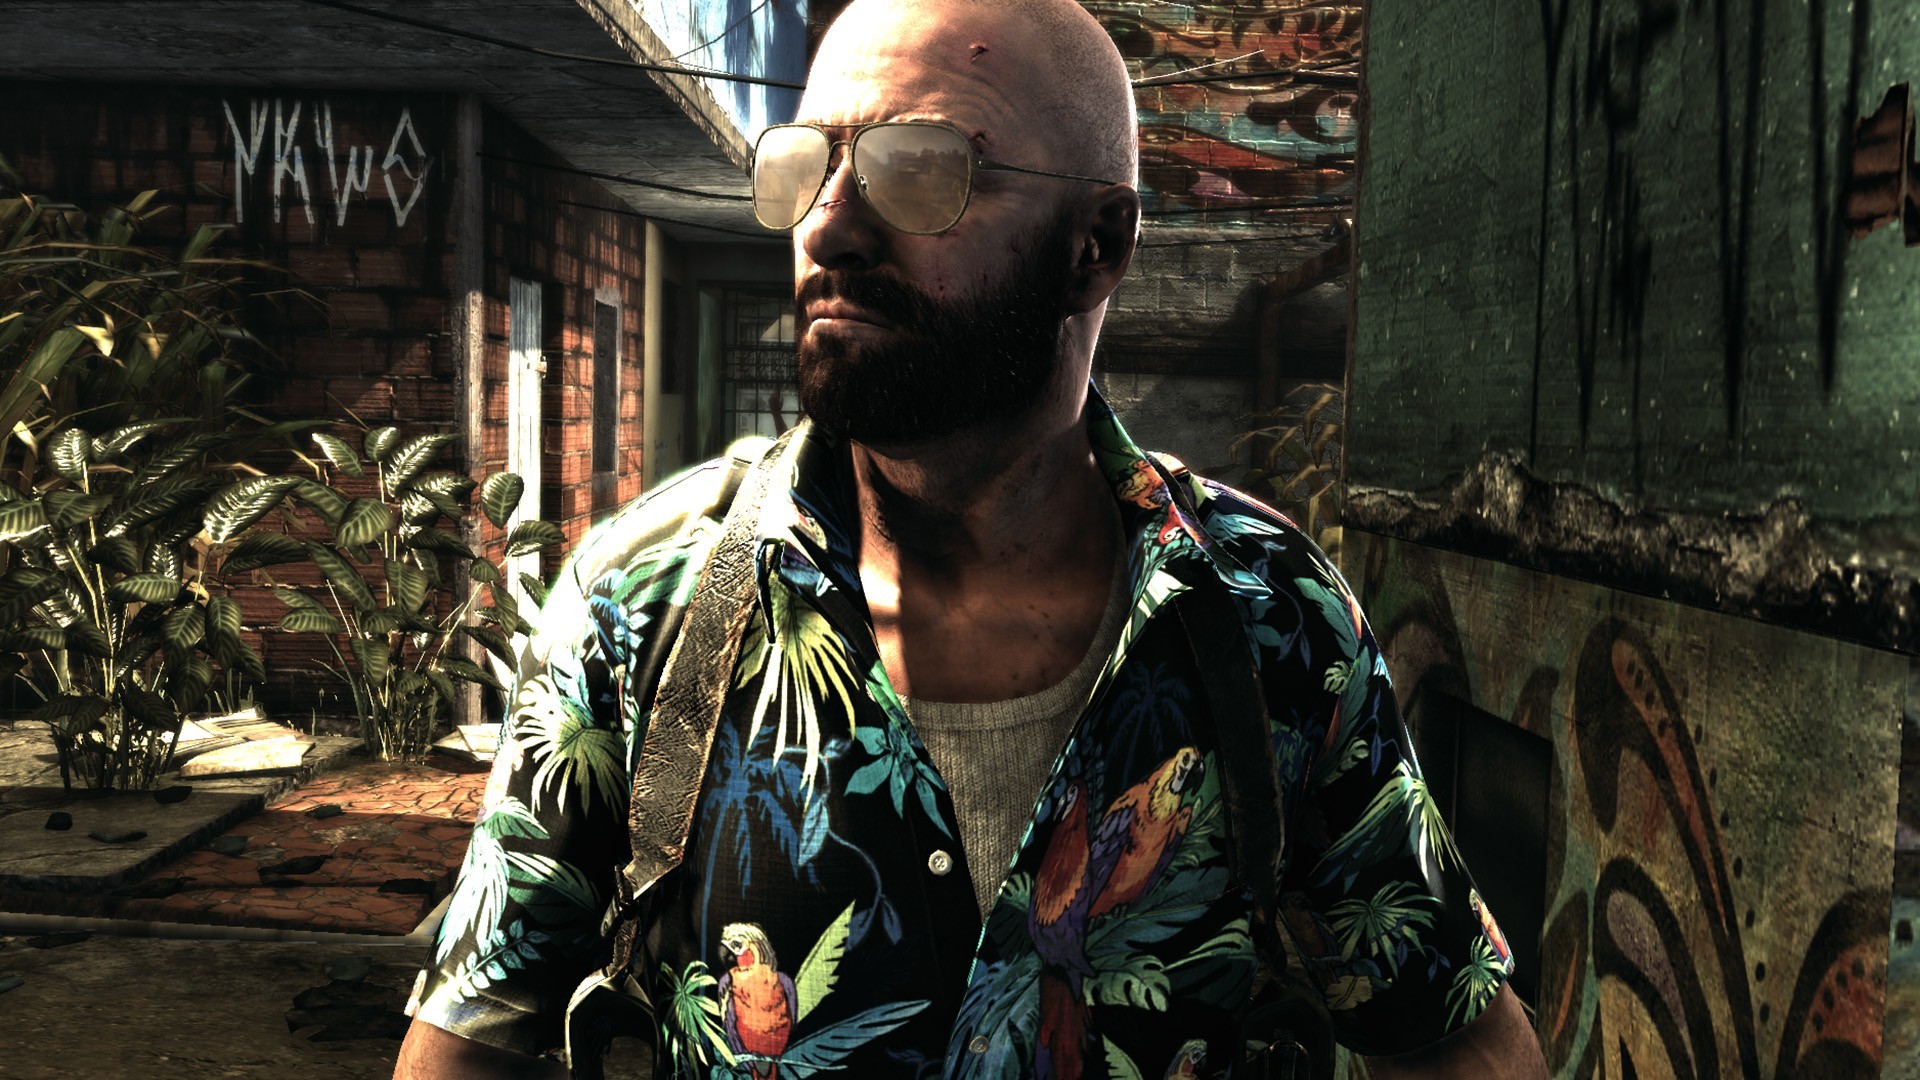 Max Payne 3 HD wallpapers, Desktop wallpaper - most viewed